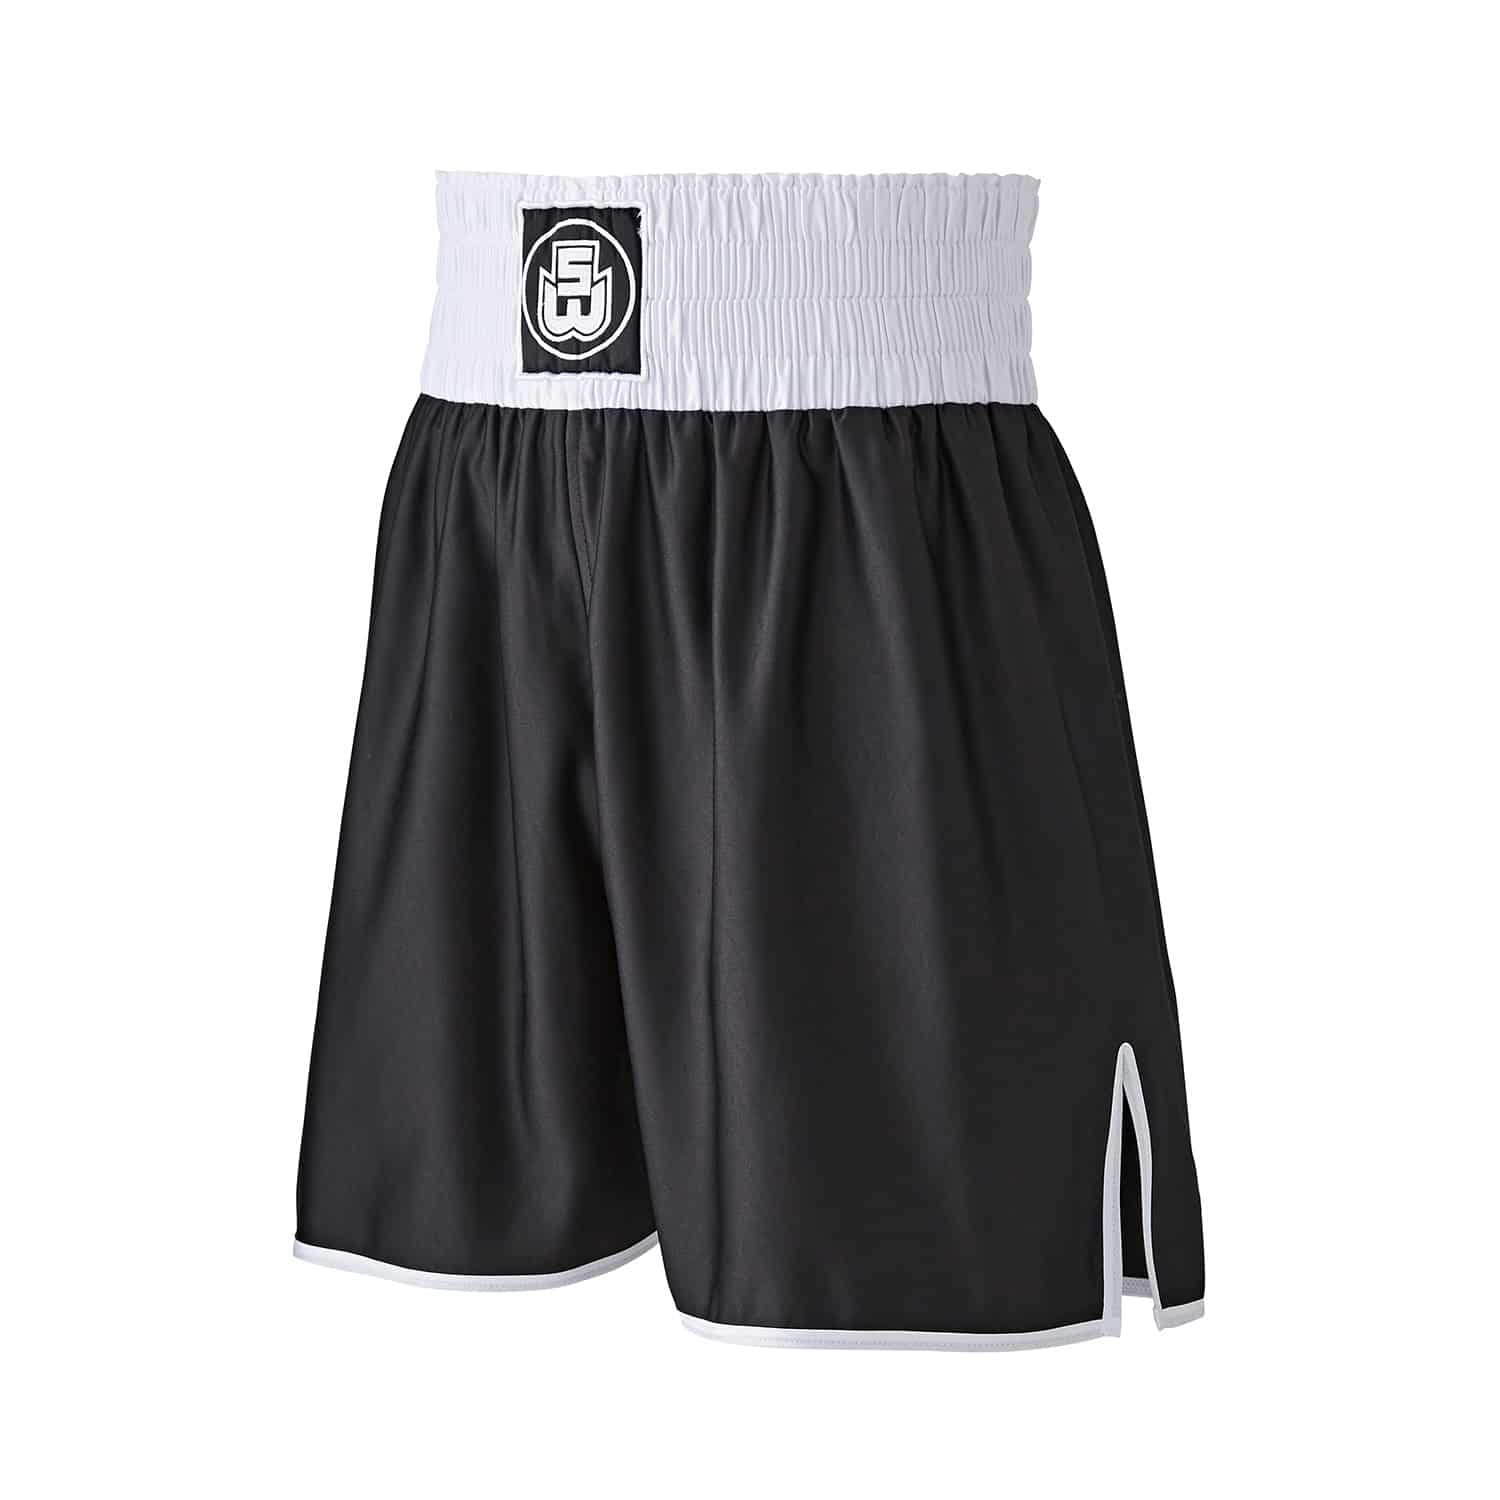 Pro Boxer Shorts Men - Black, Dark Grey